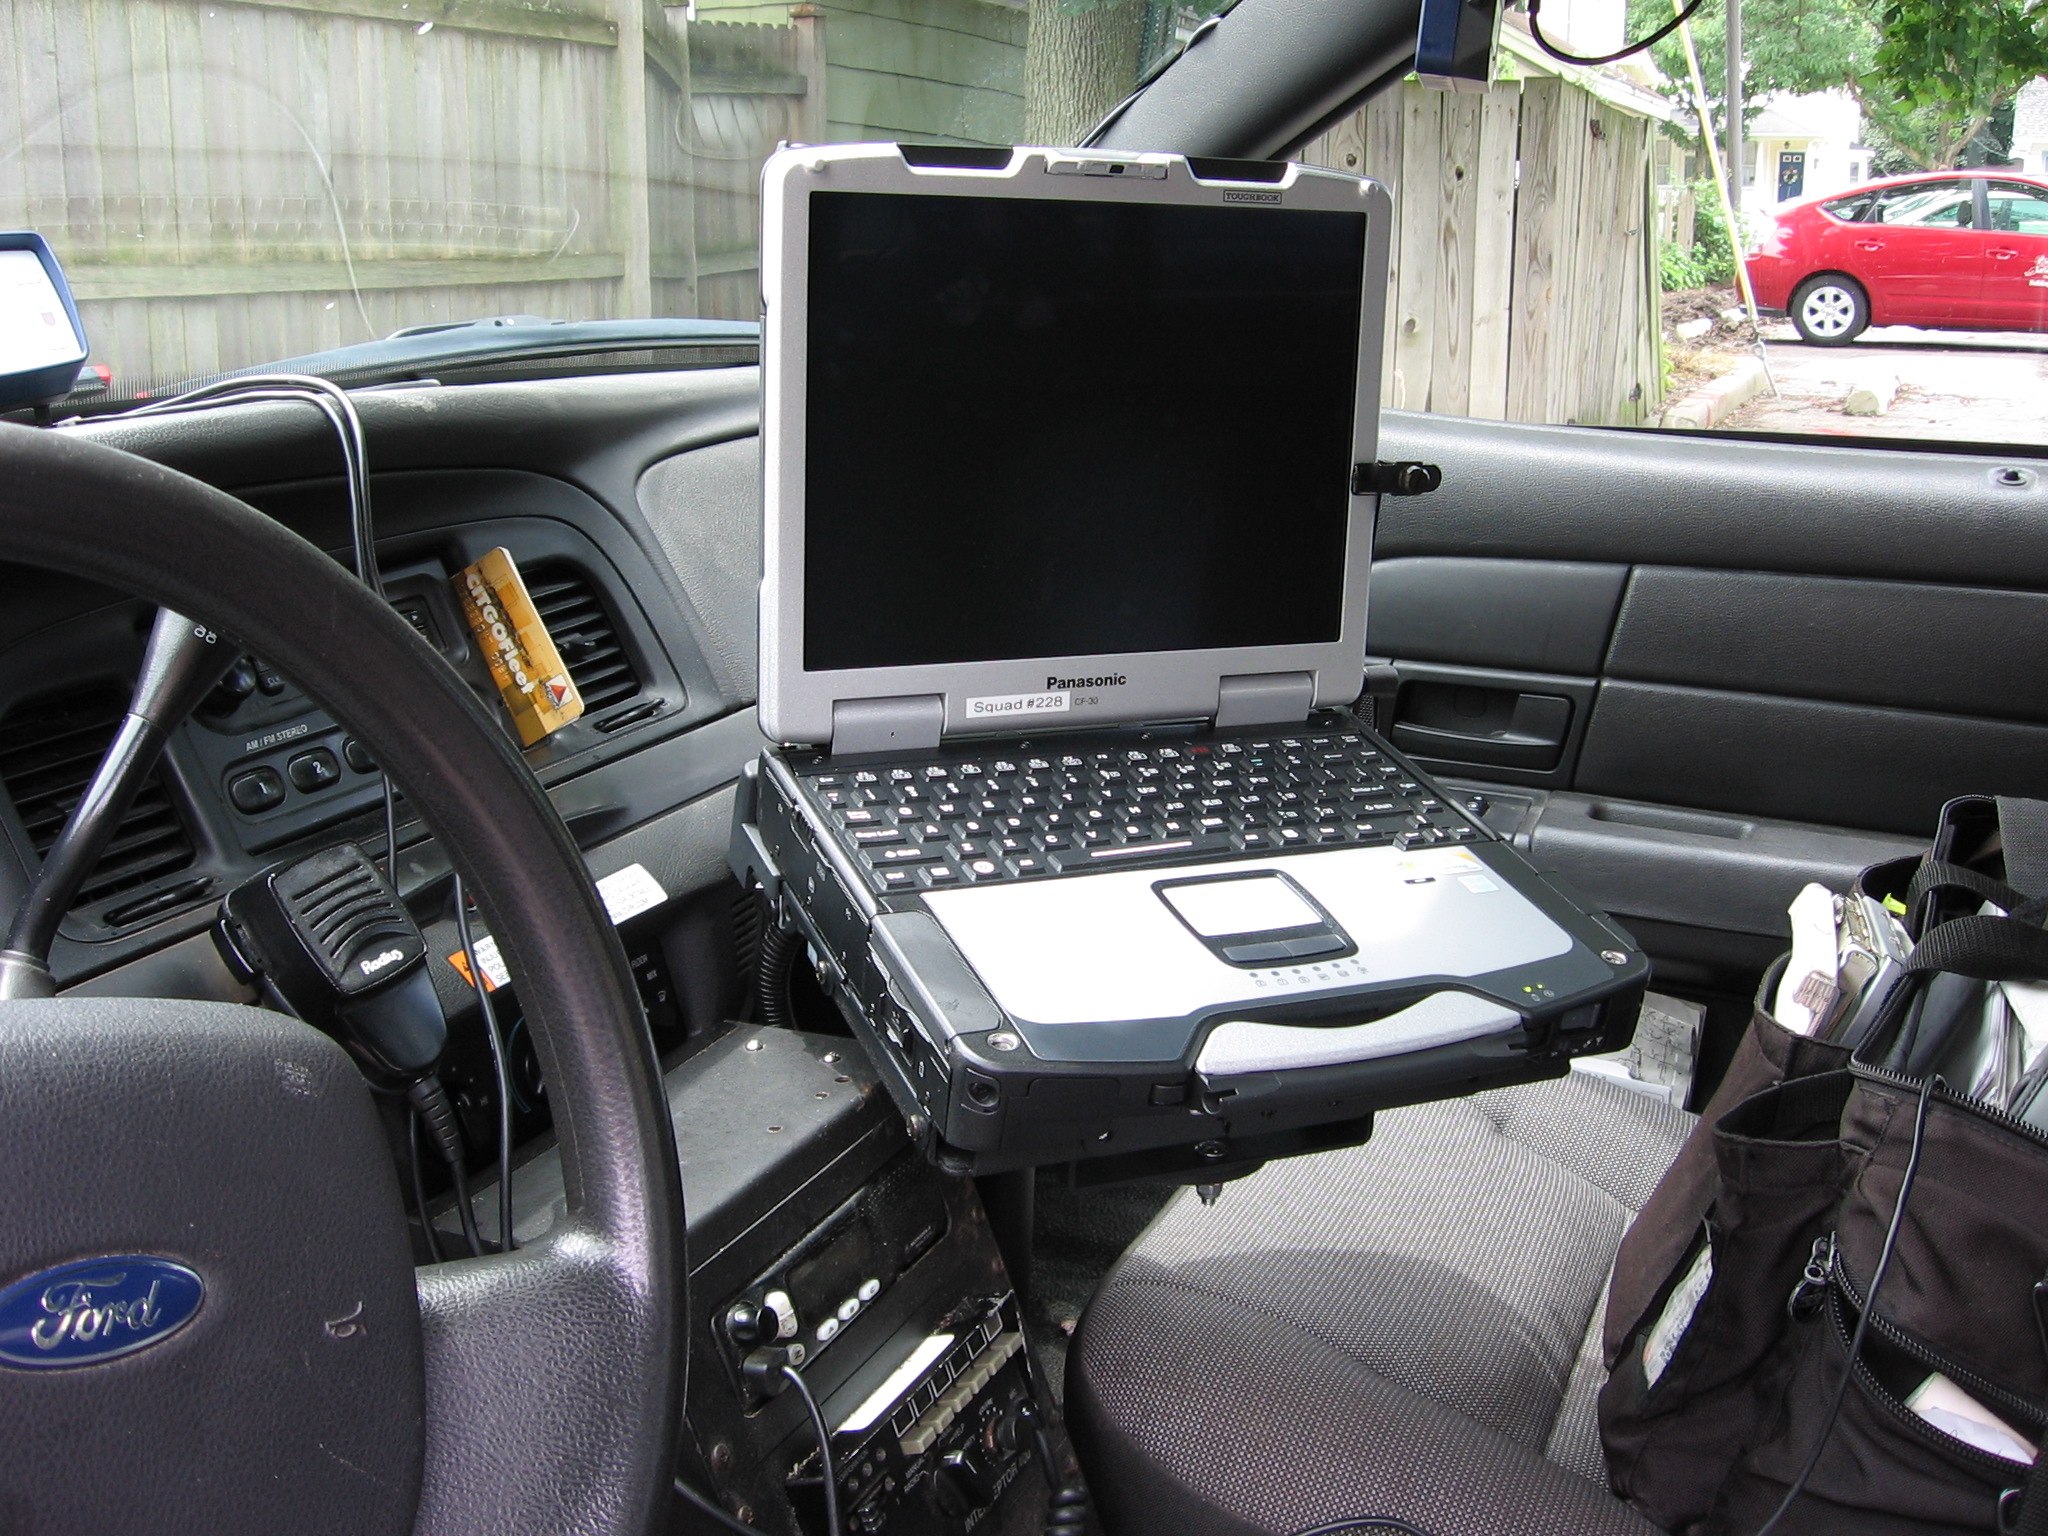 Panasonic Toughbook Vehicle Laptop Mount | Vehicle Mount | M ...